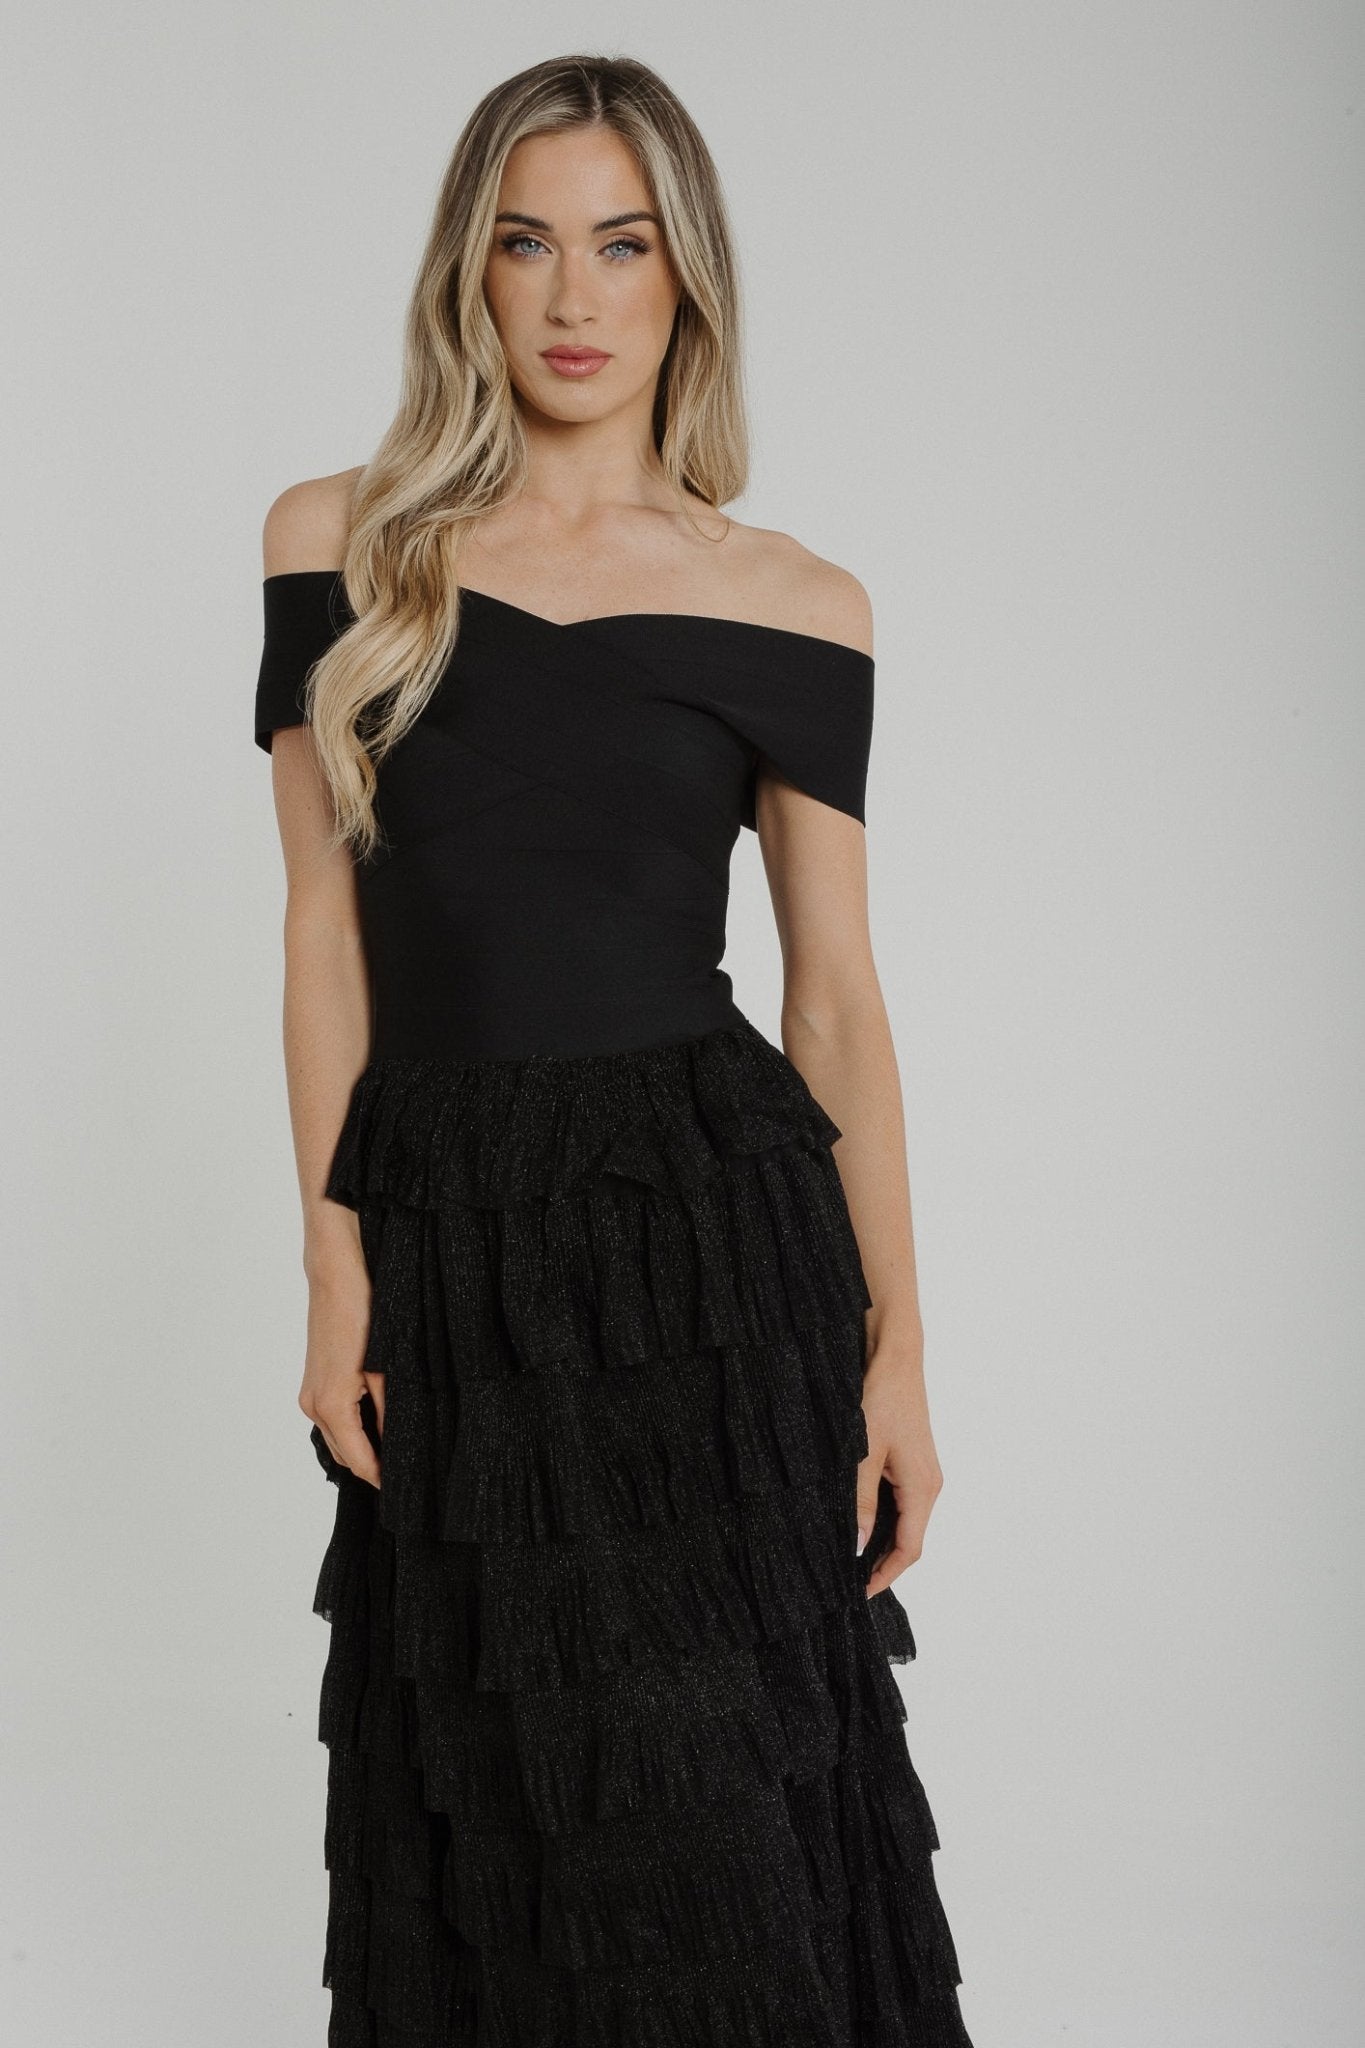 Holly Tiered Ruffle Dress In Black - The Walk in Wardrobe